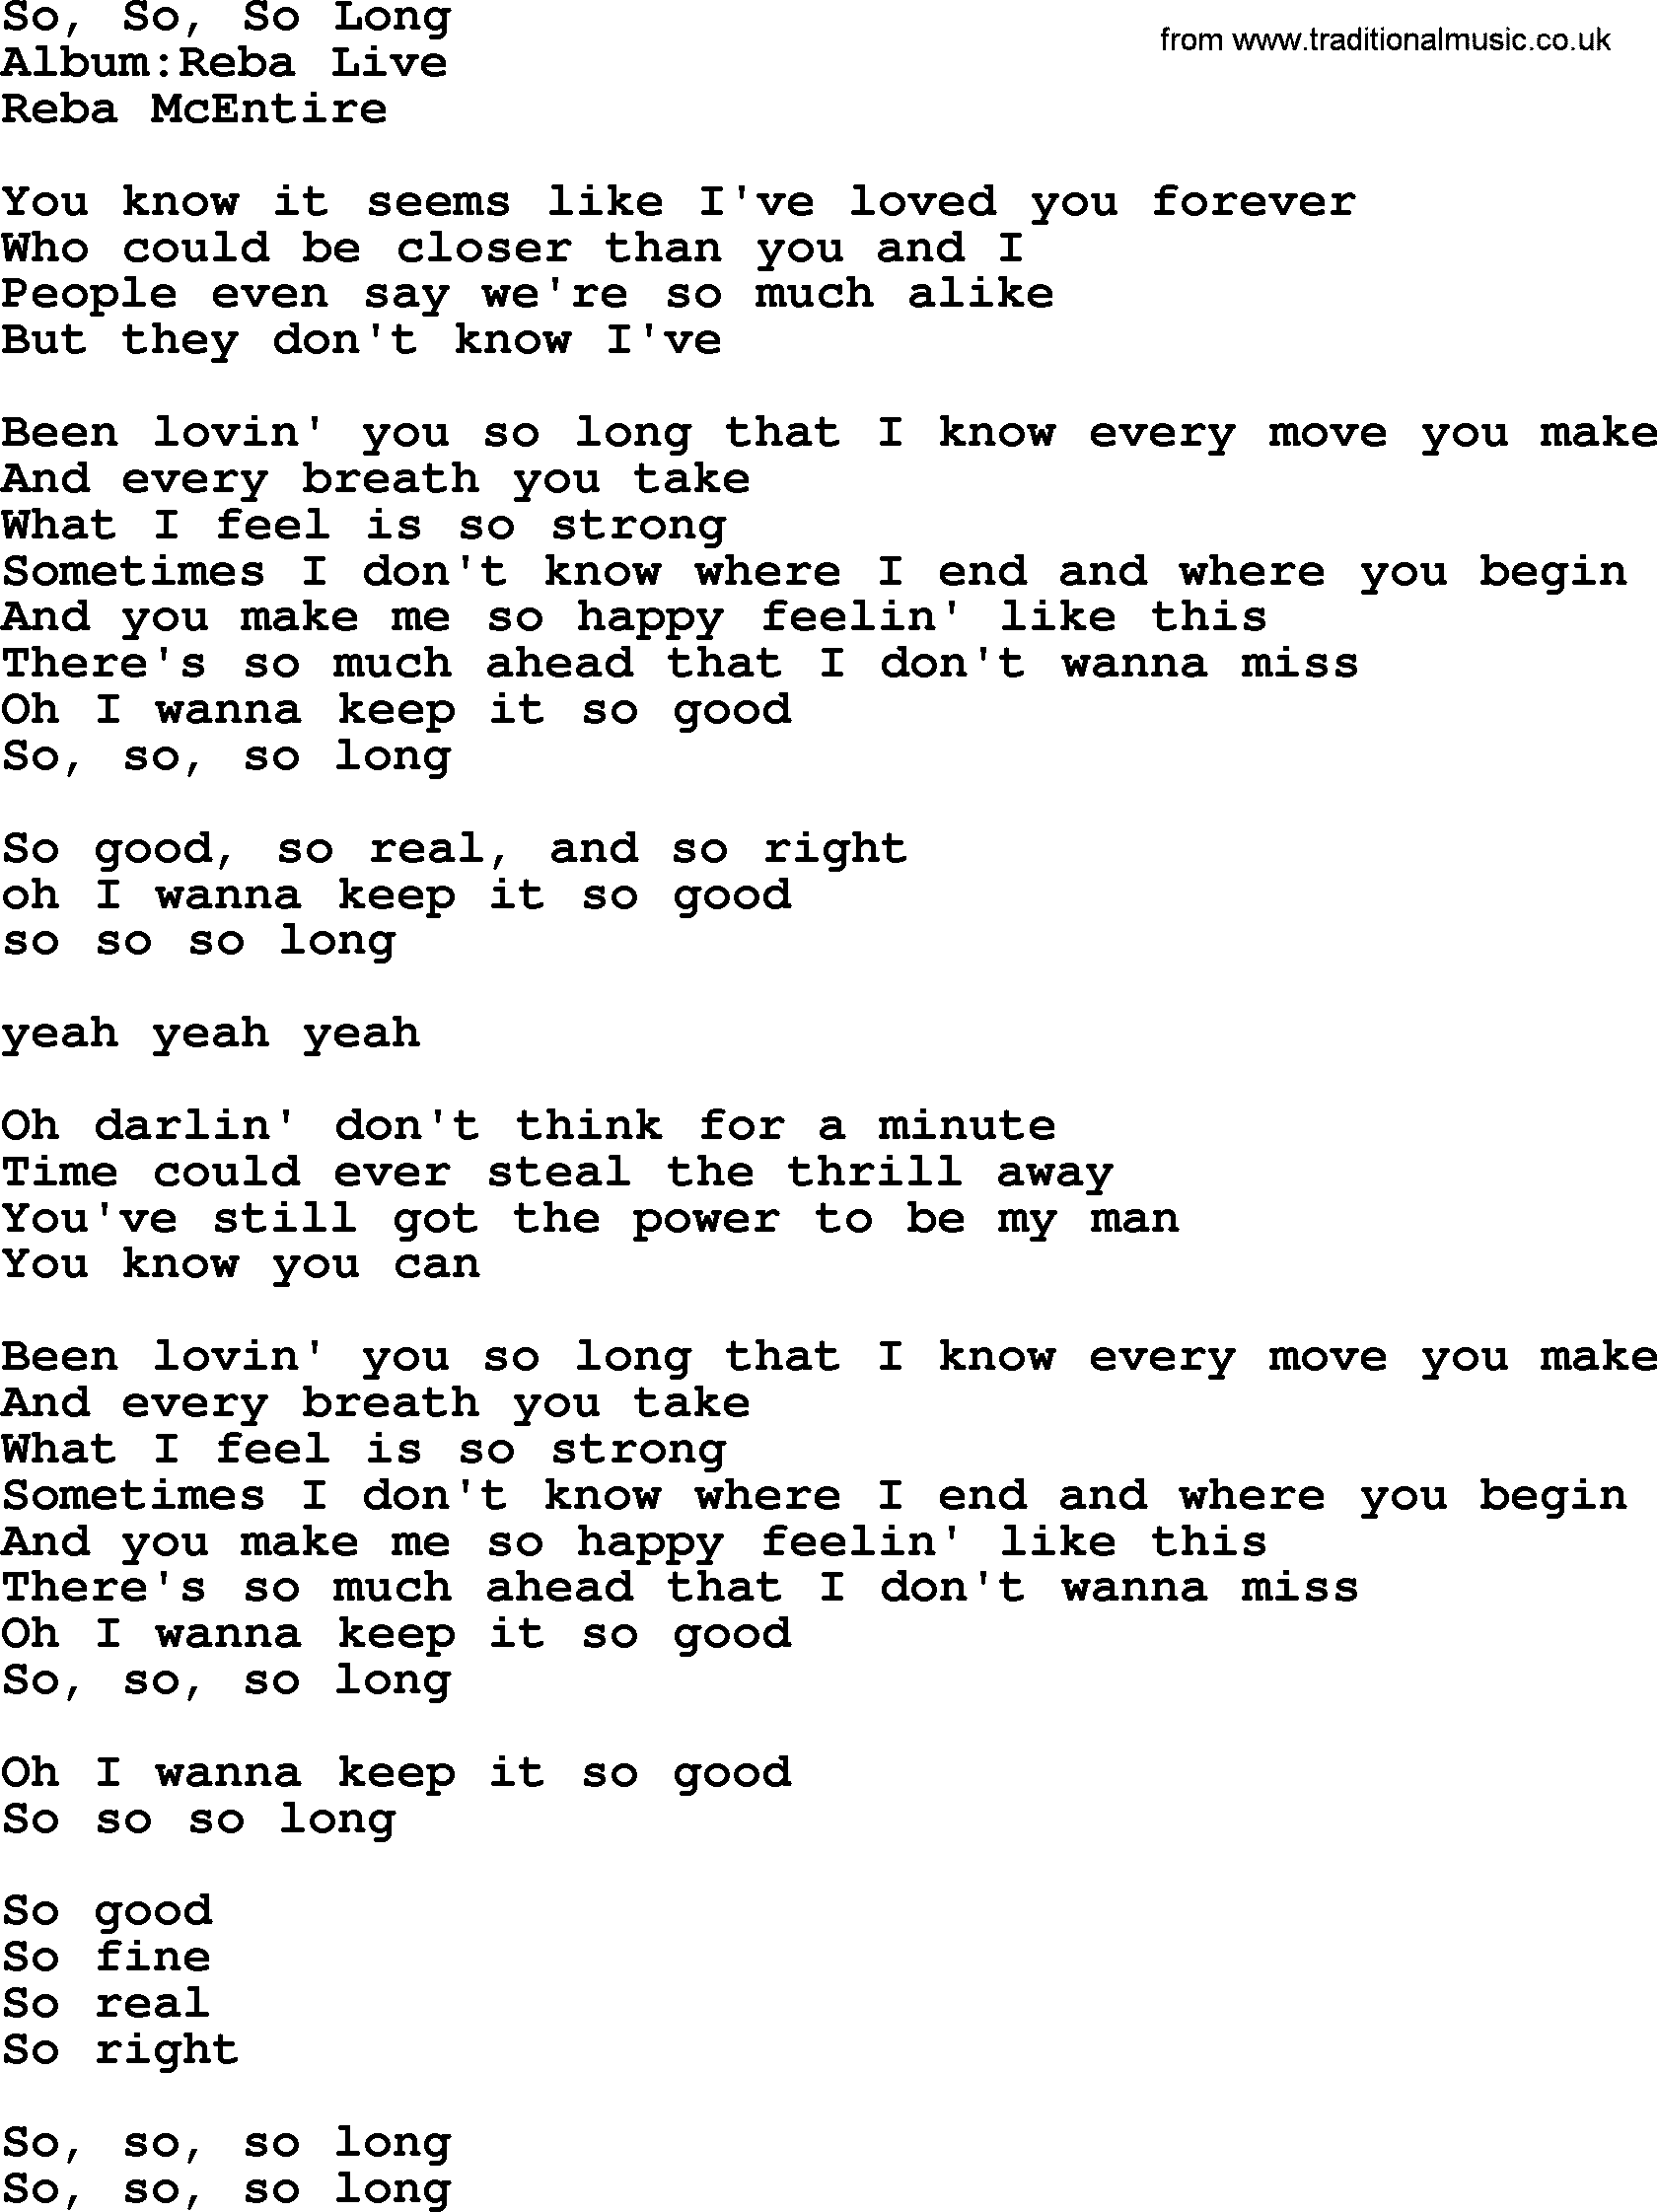 Reba McEntire song: So, So, So Long lyrics